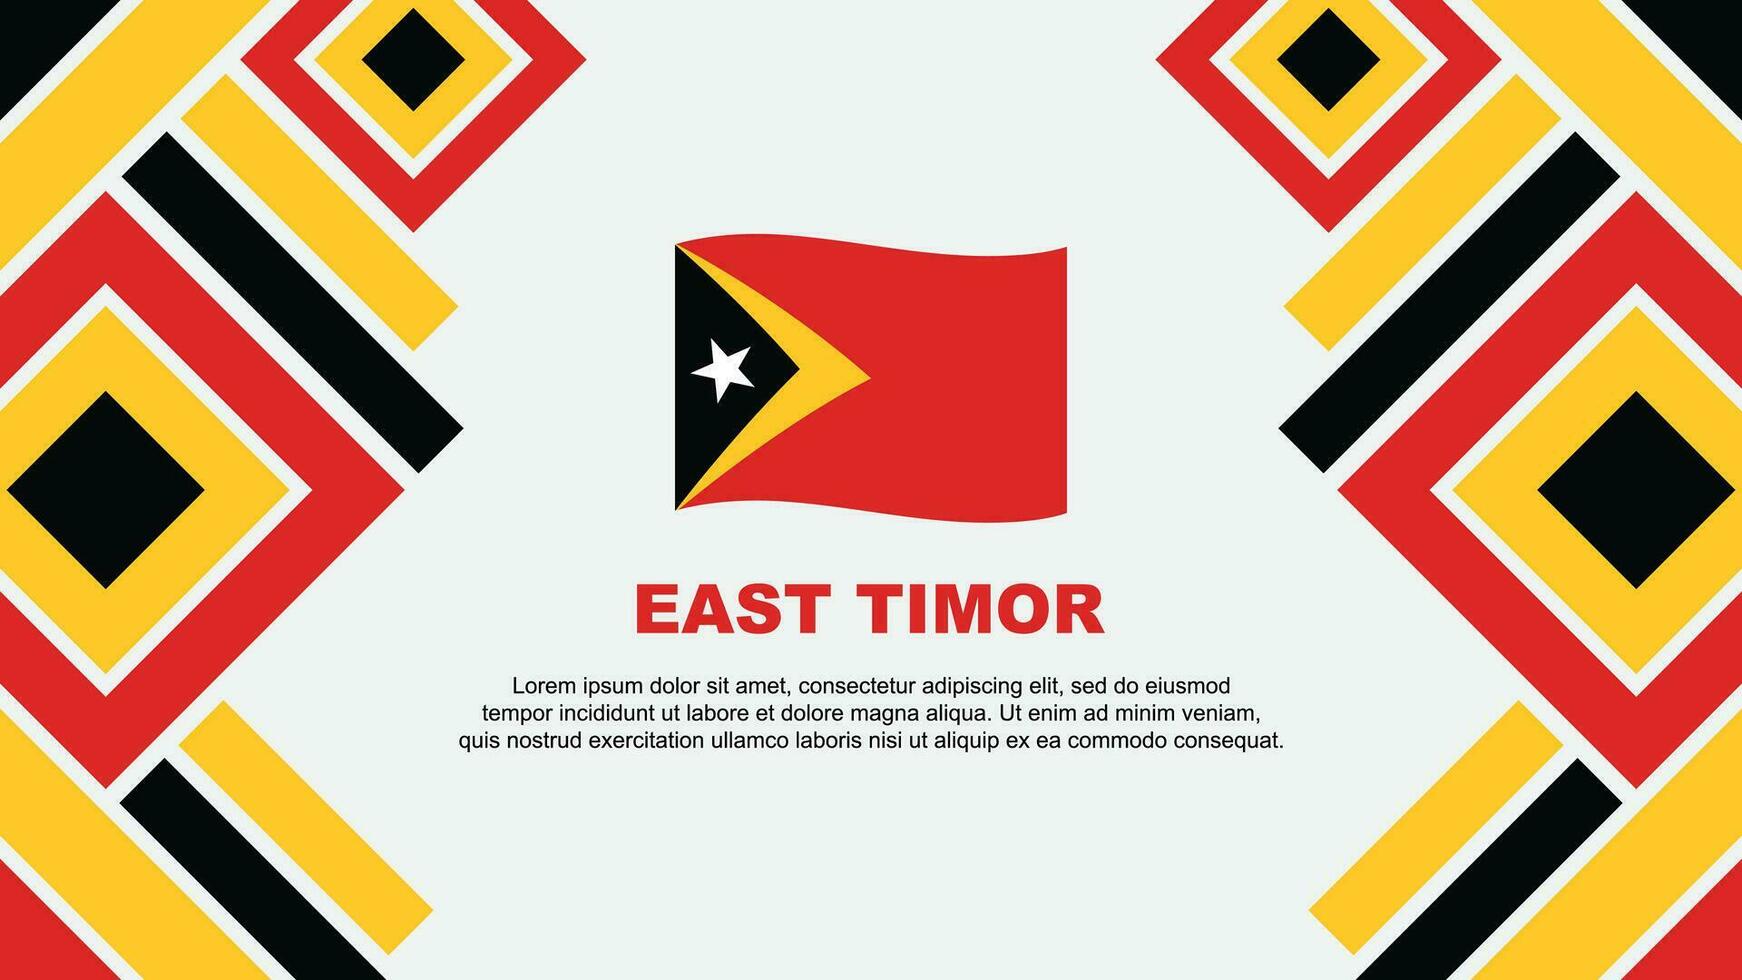 East Timor Flag Abstract Background Design Template. East Timor Independence Day Banner Wallpaper Vector Illustration. East Timor